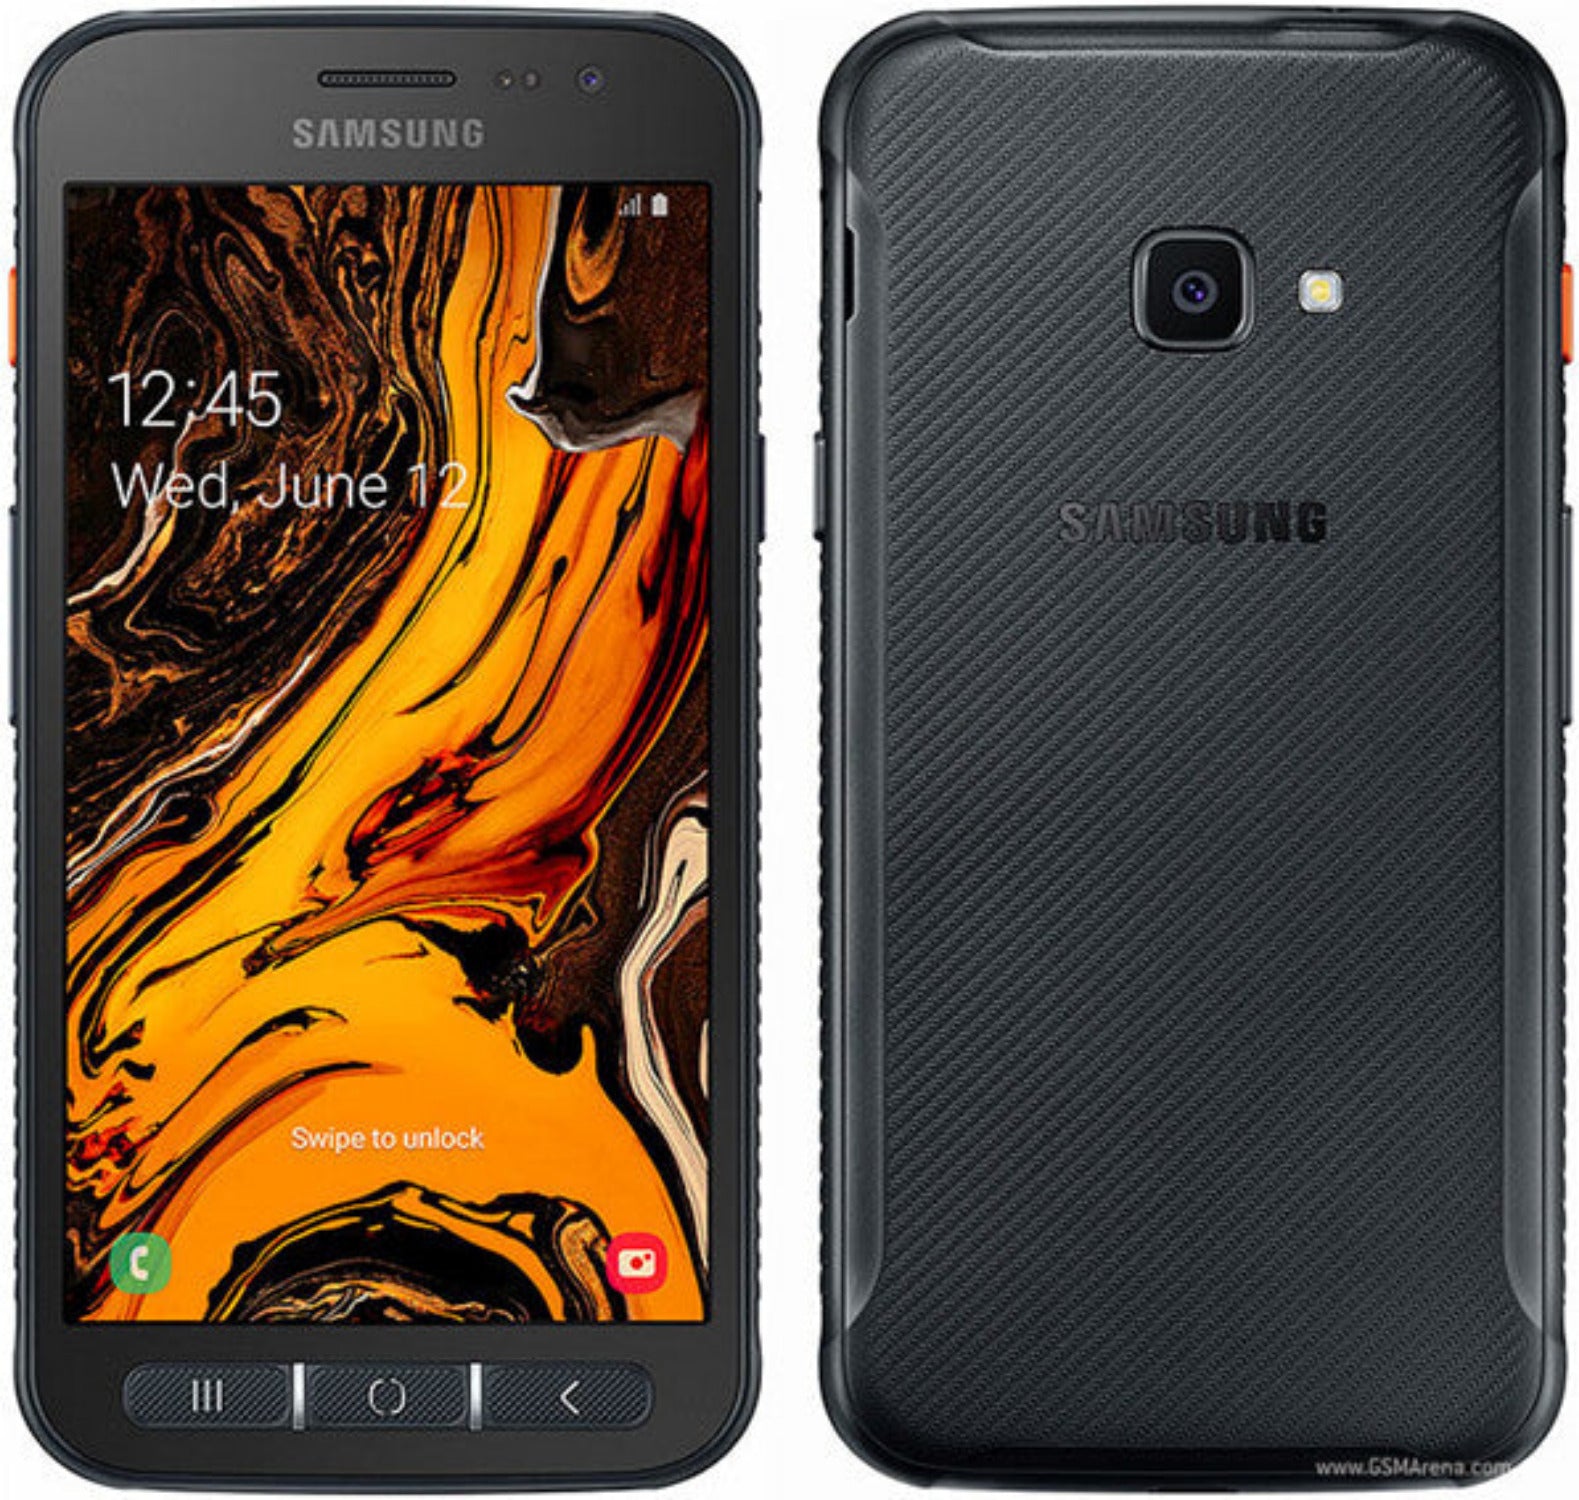 Samsung Galaxy Xcover 4s SM-G398 Dual Sim Black